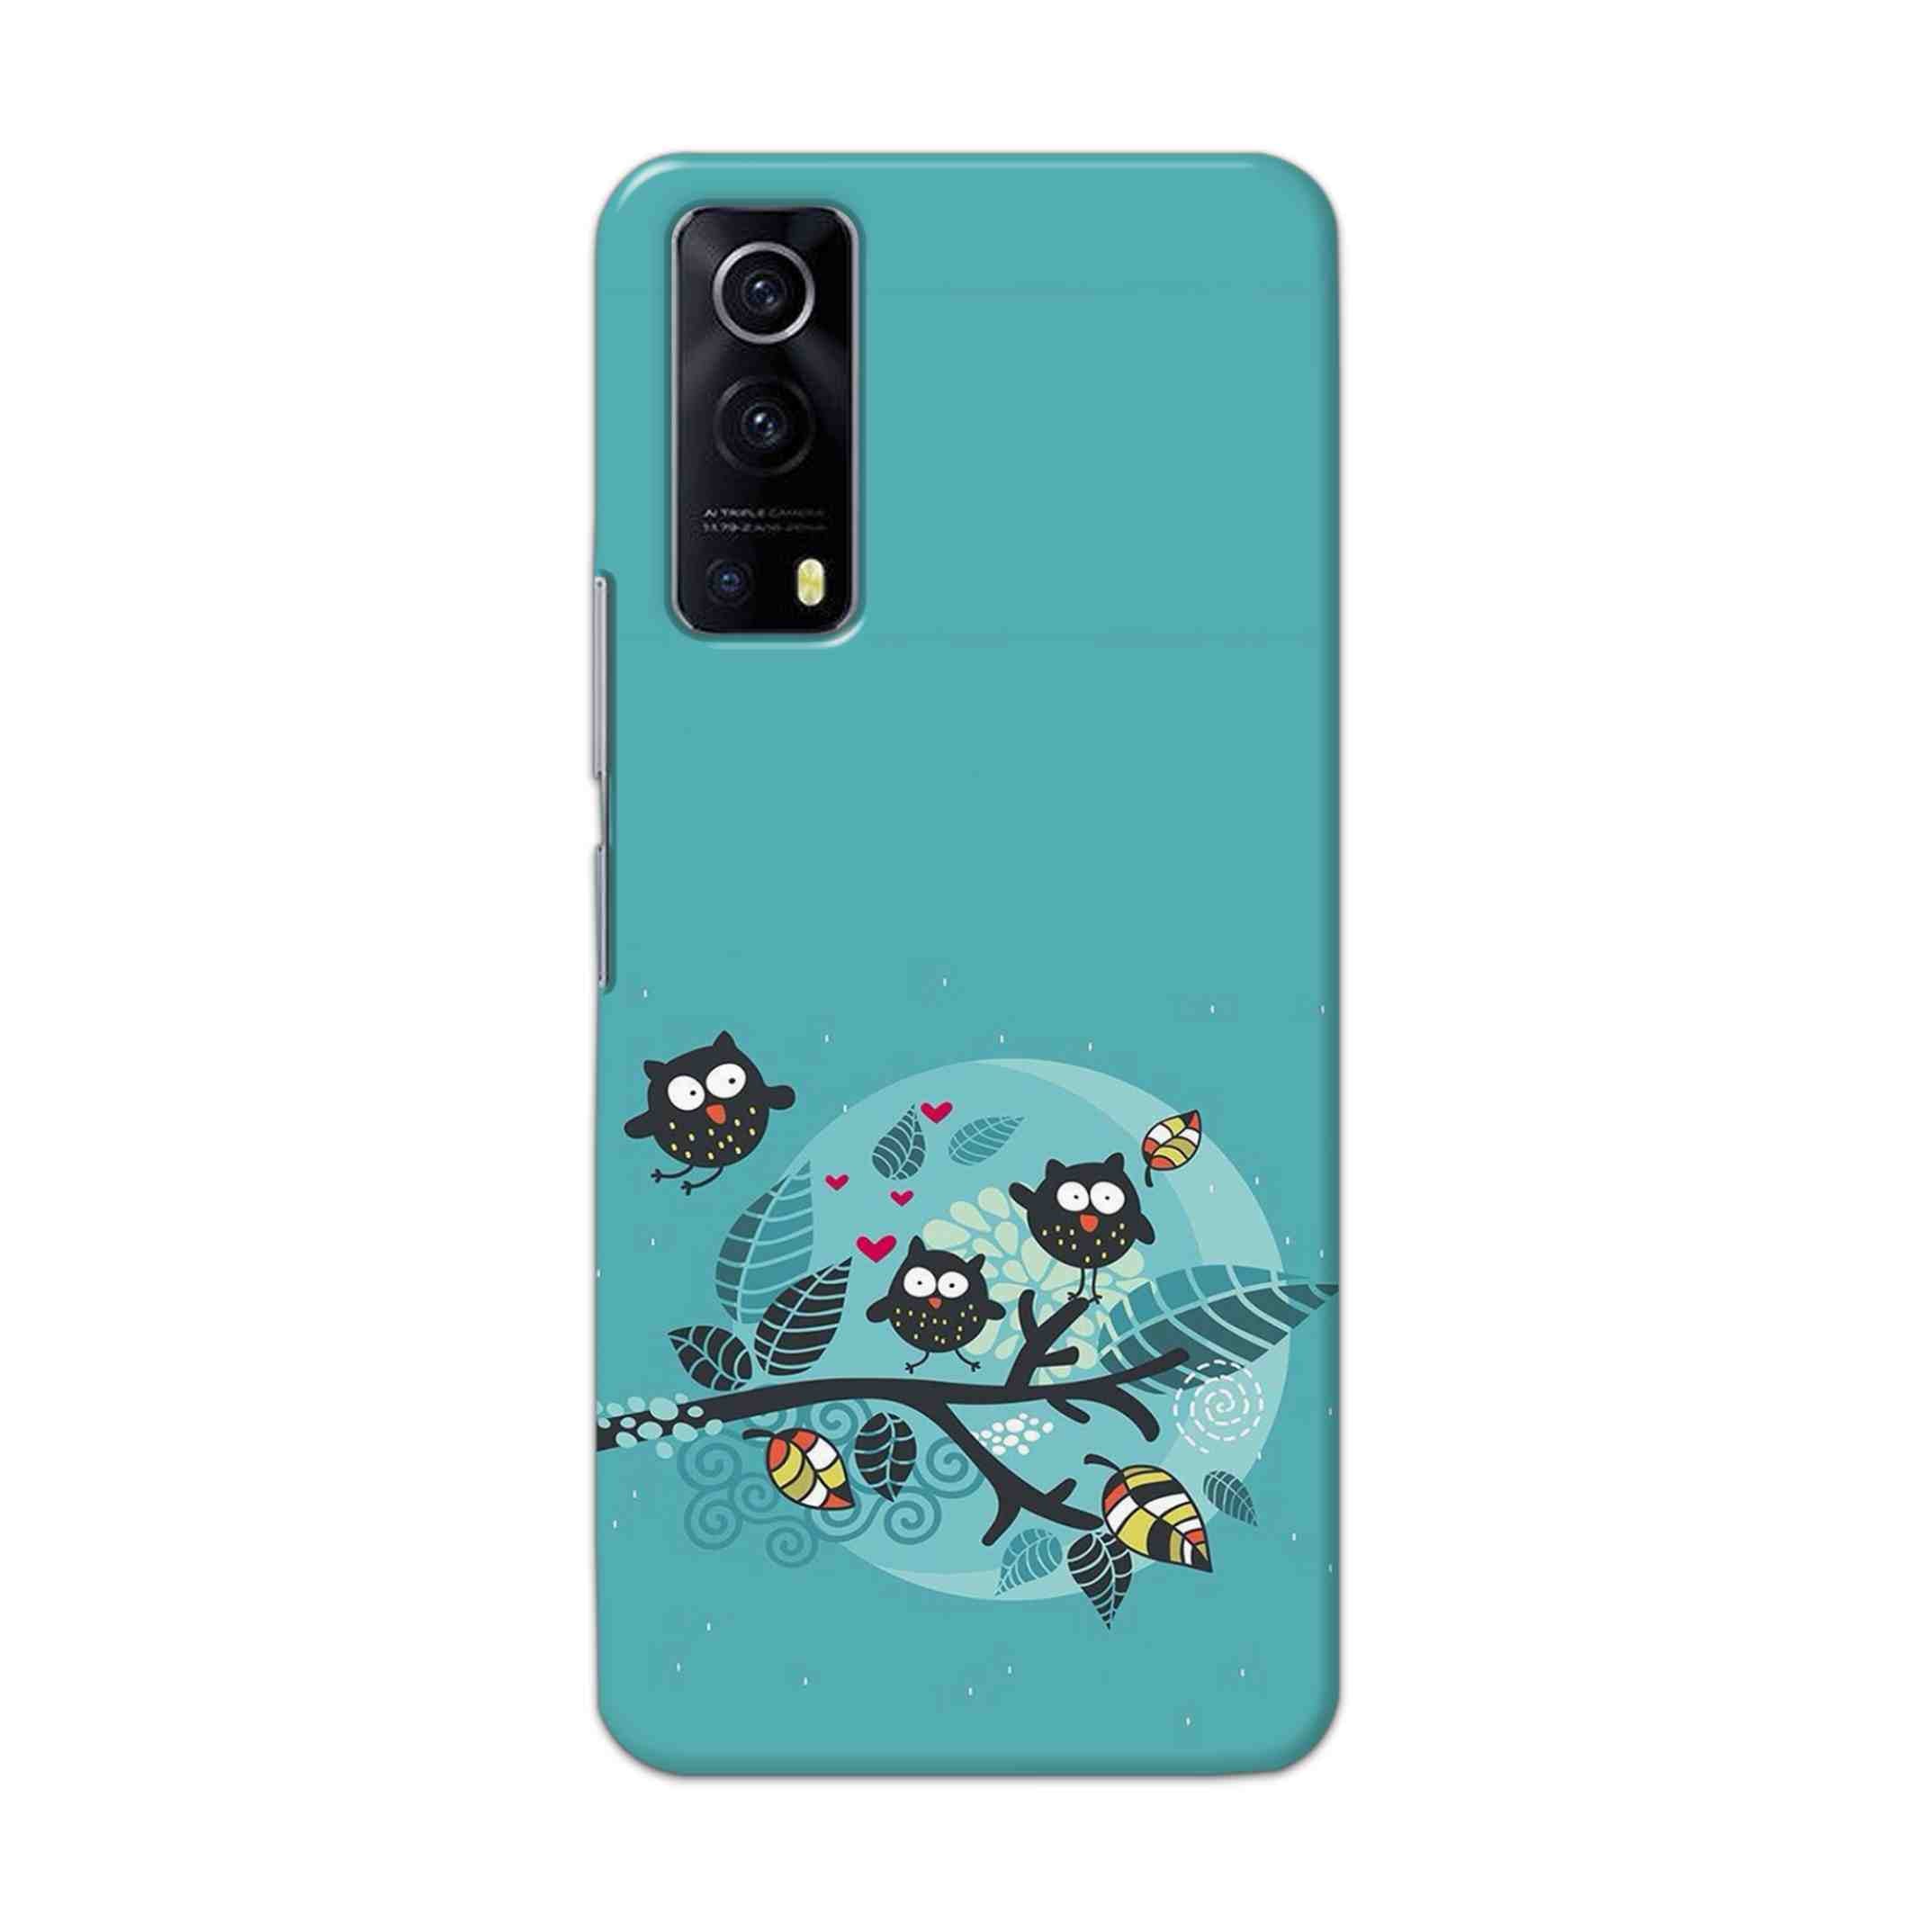 Buy Owl Hard Back Mobile Phone Case Cover For Vivo IQOO Z3 Online